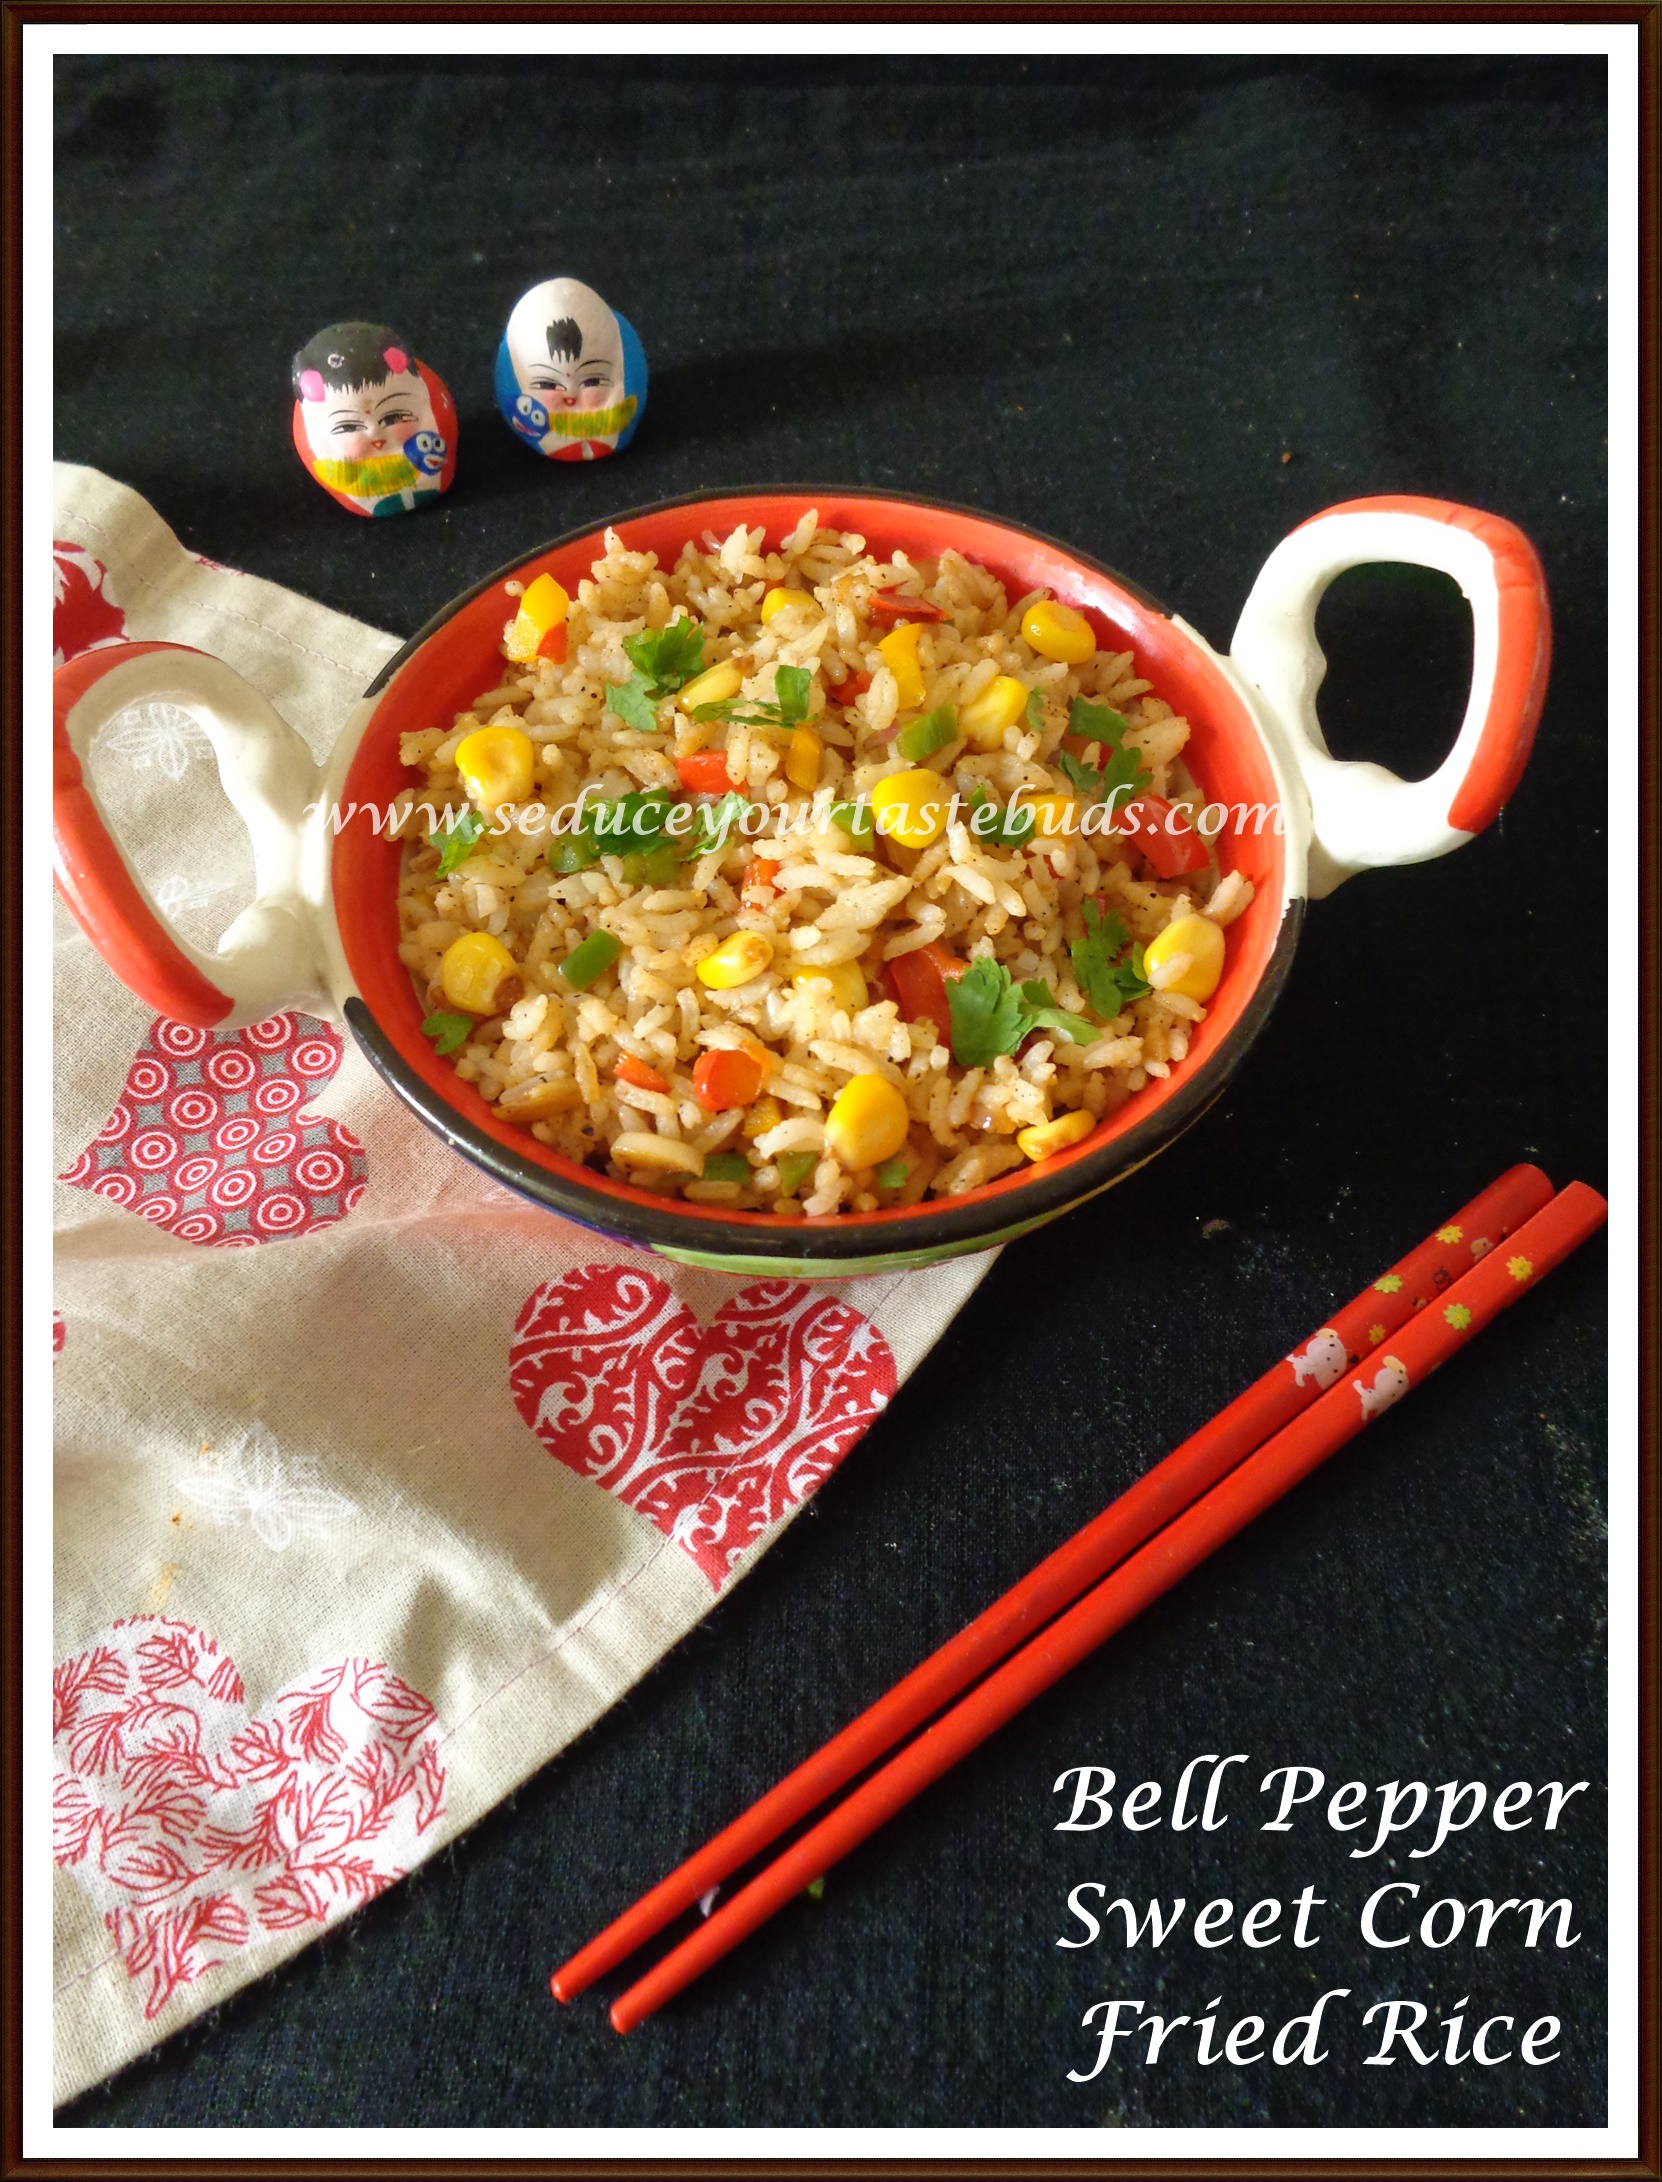 Bell Pepper & Sweet Corn Fried Rice Recipe - Seduce Your Tastebuds...